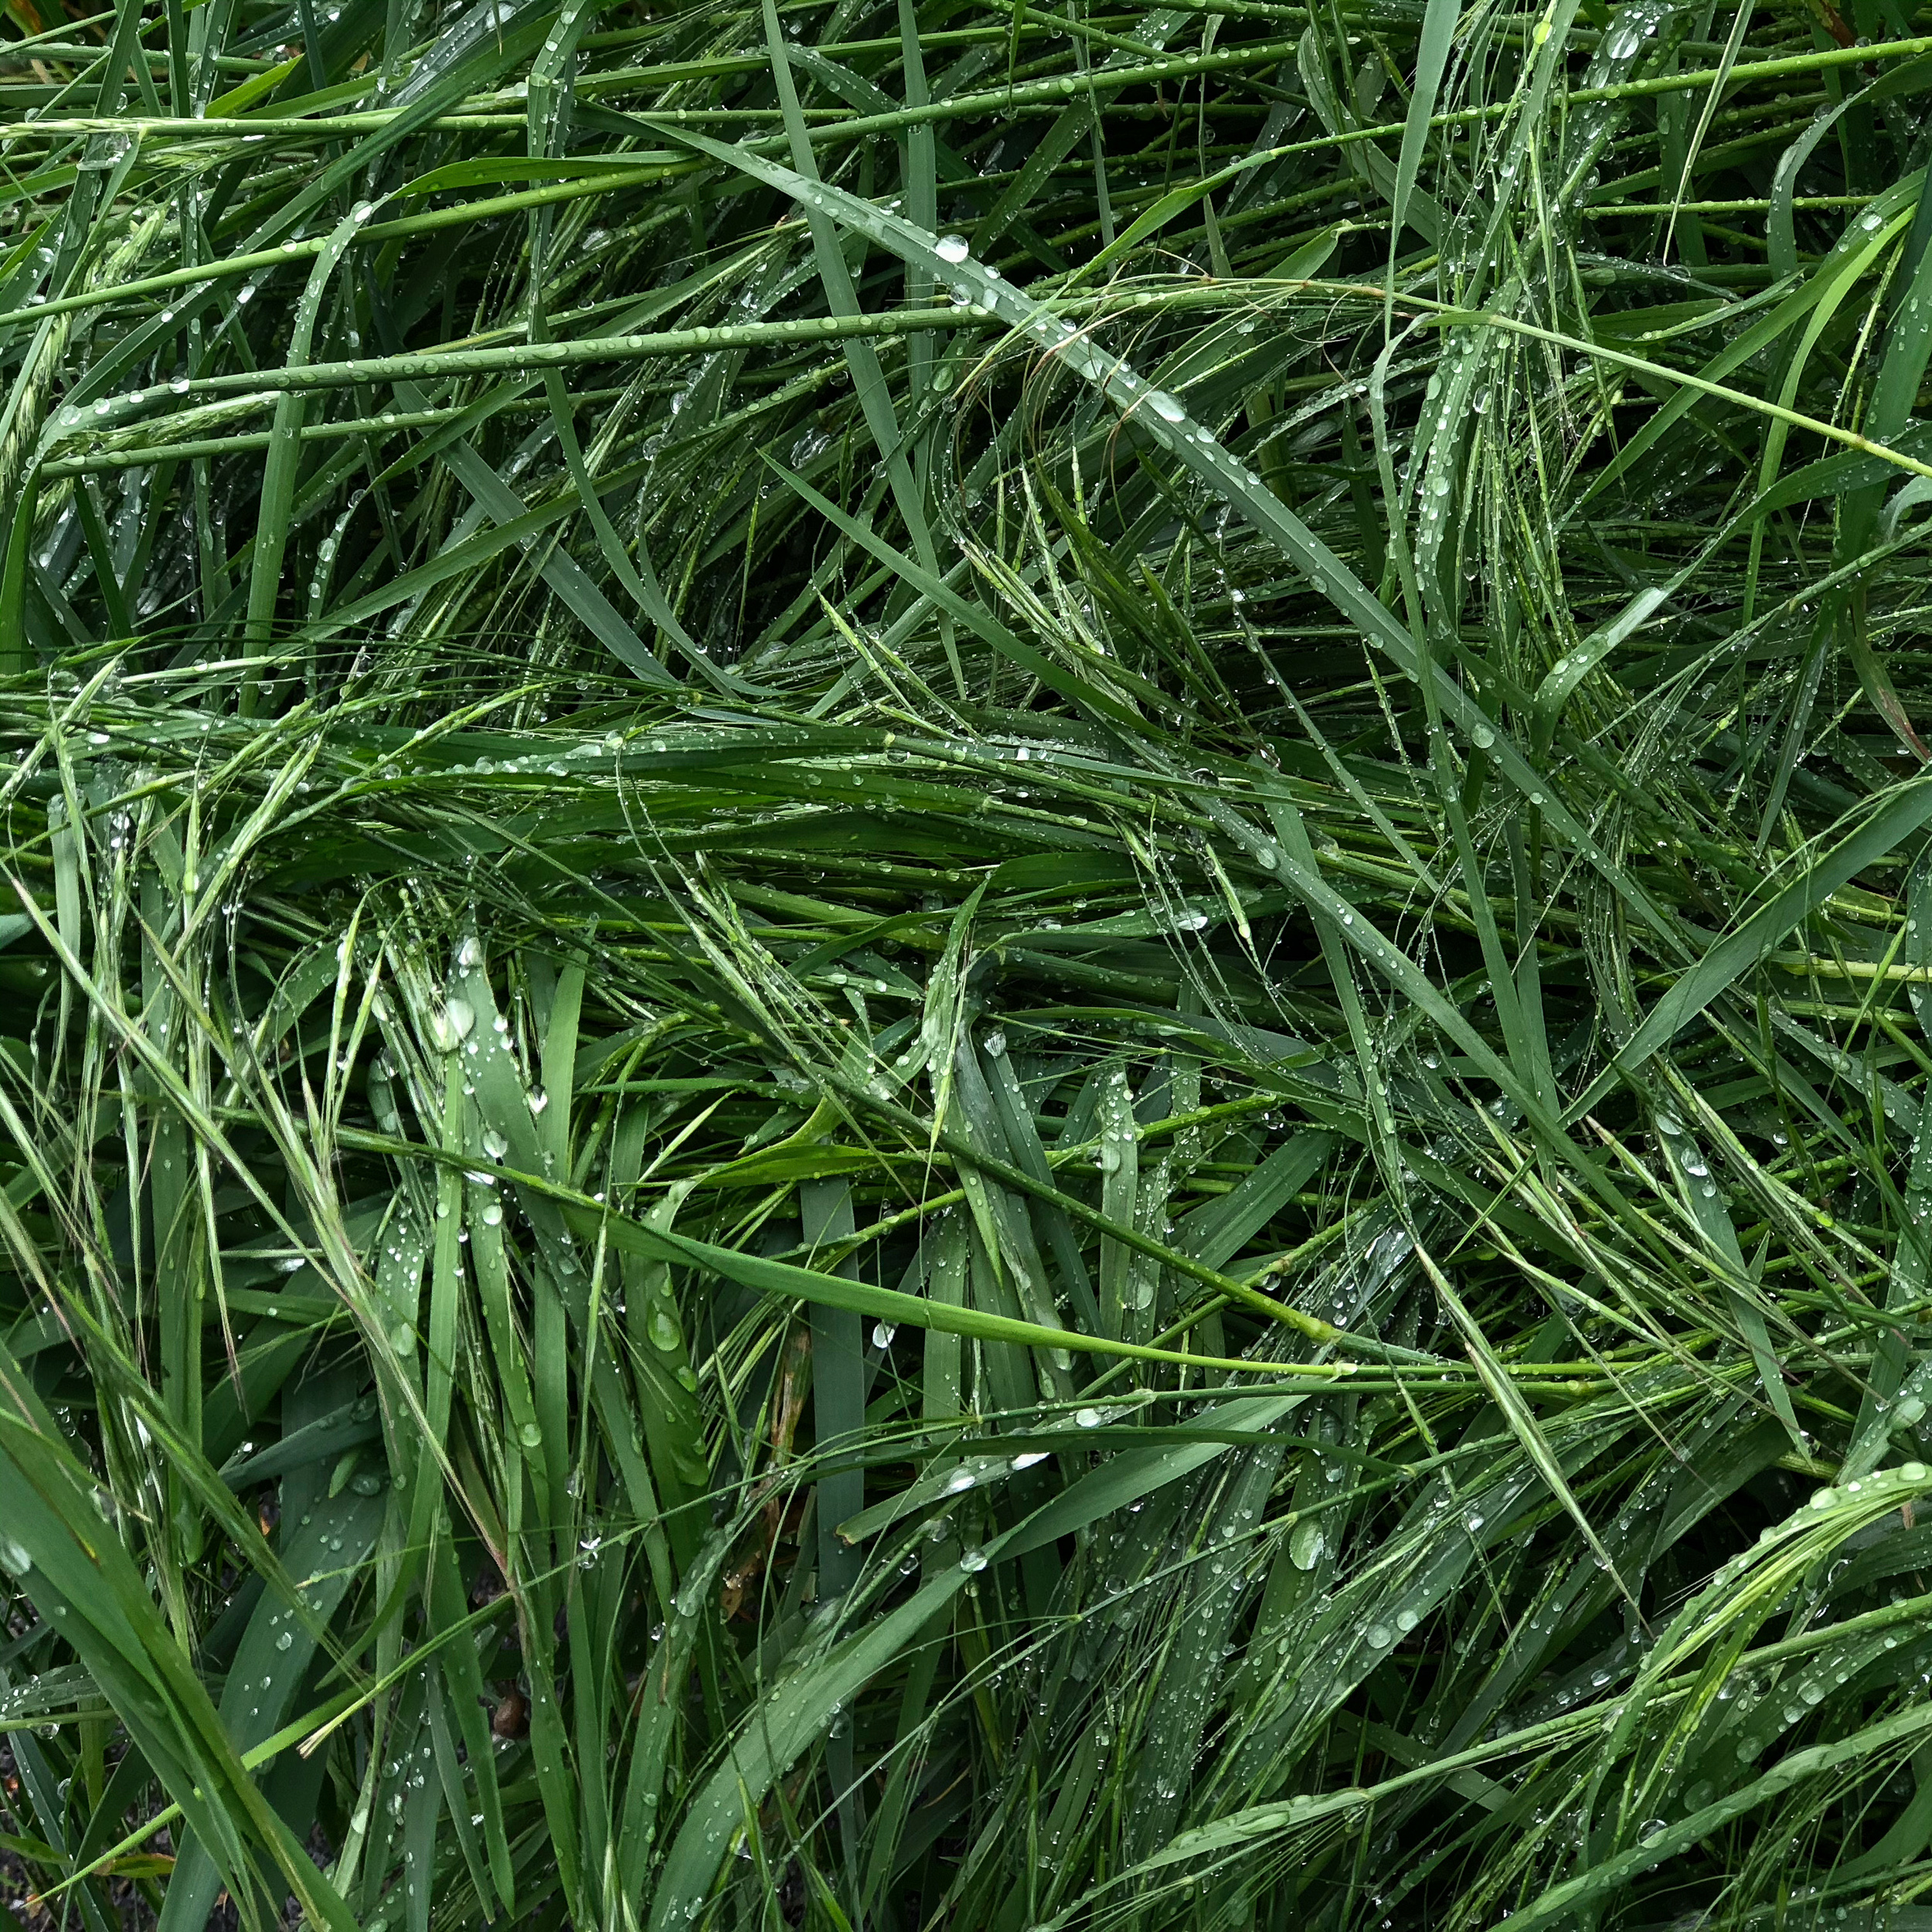 Studies of wet grass